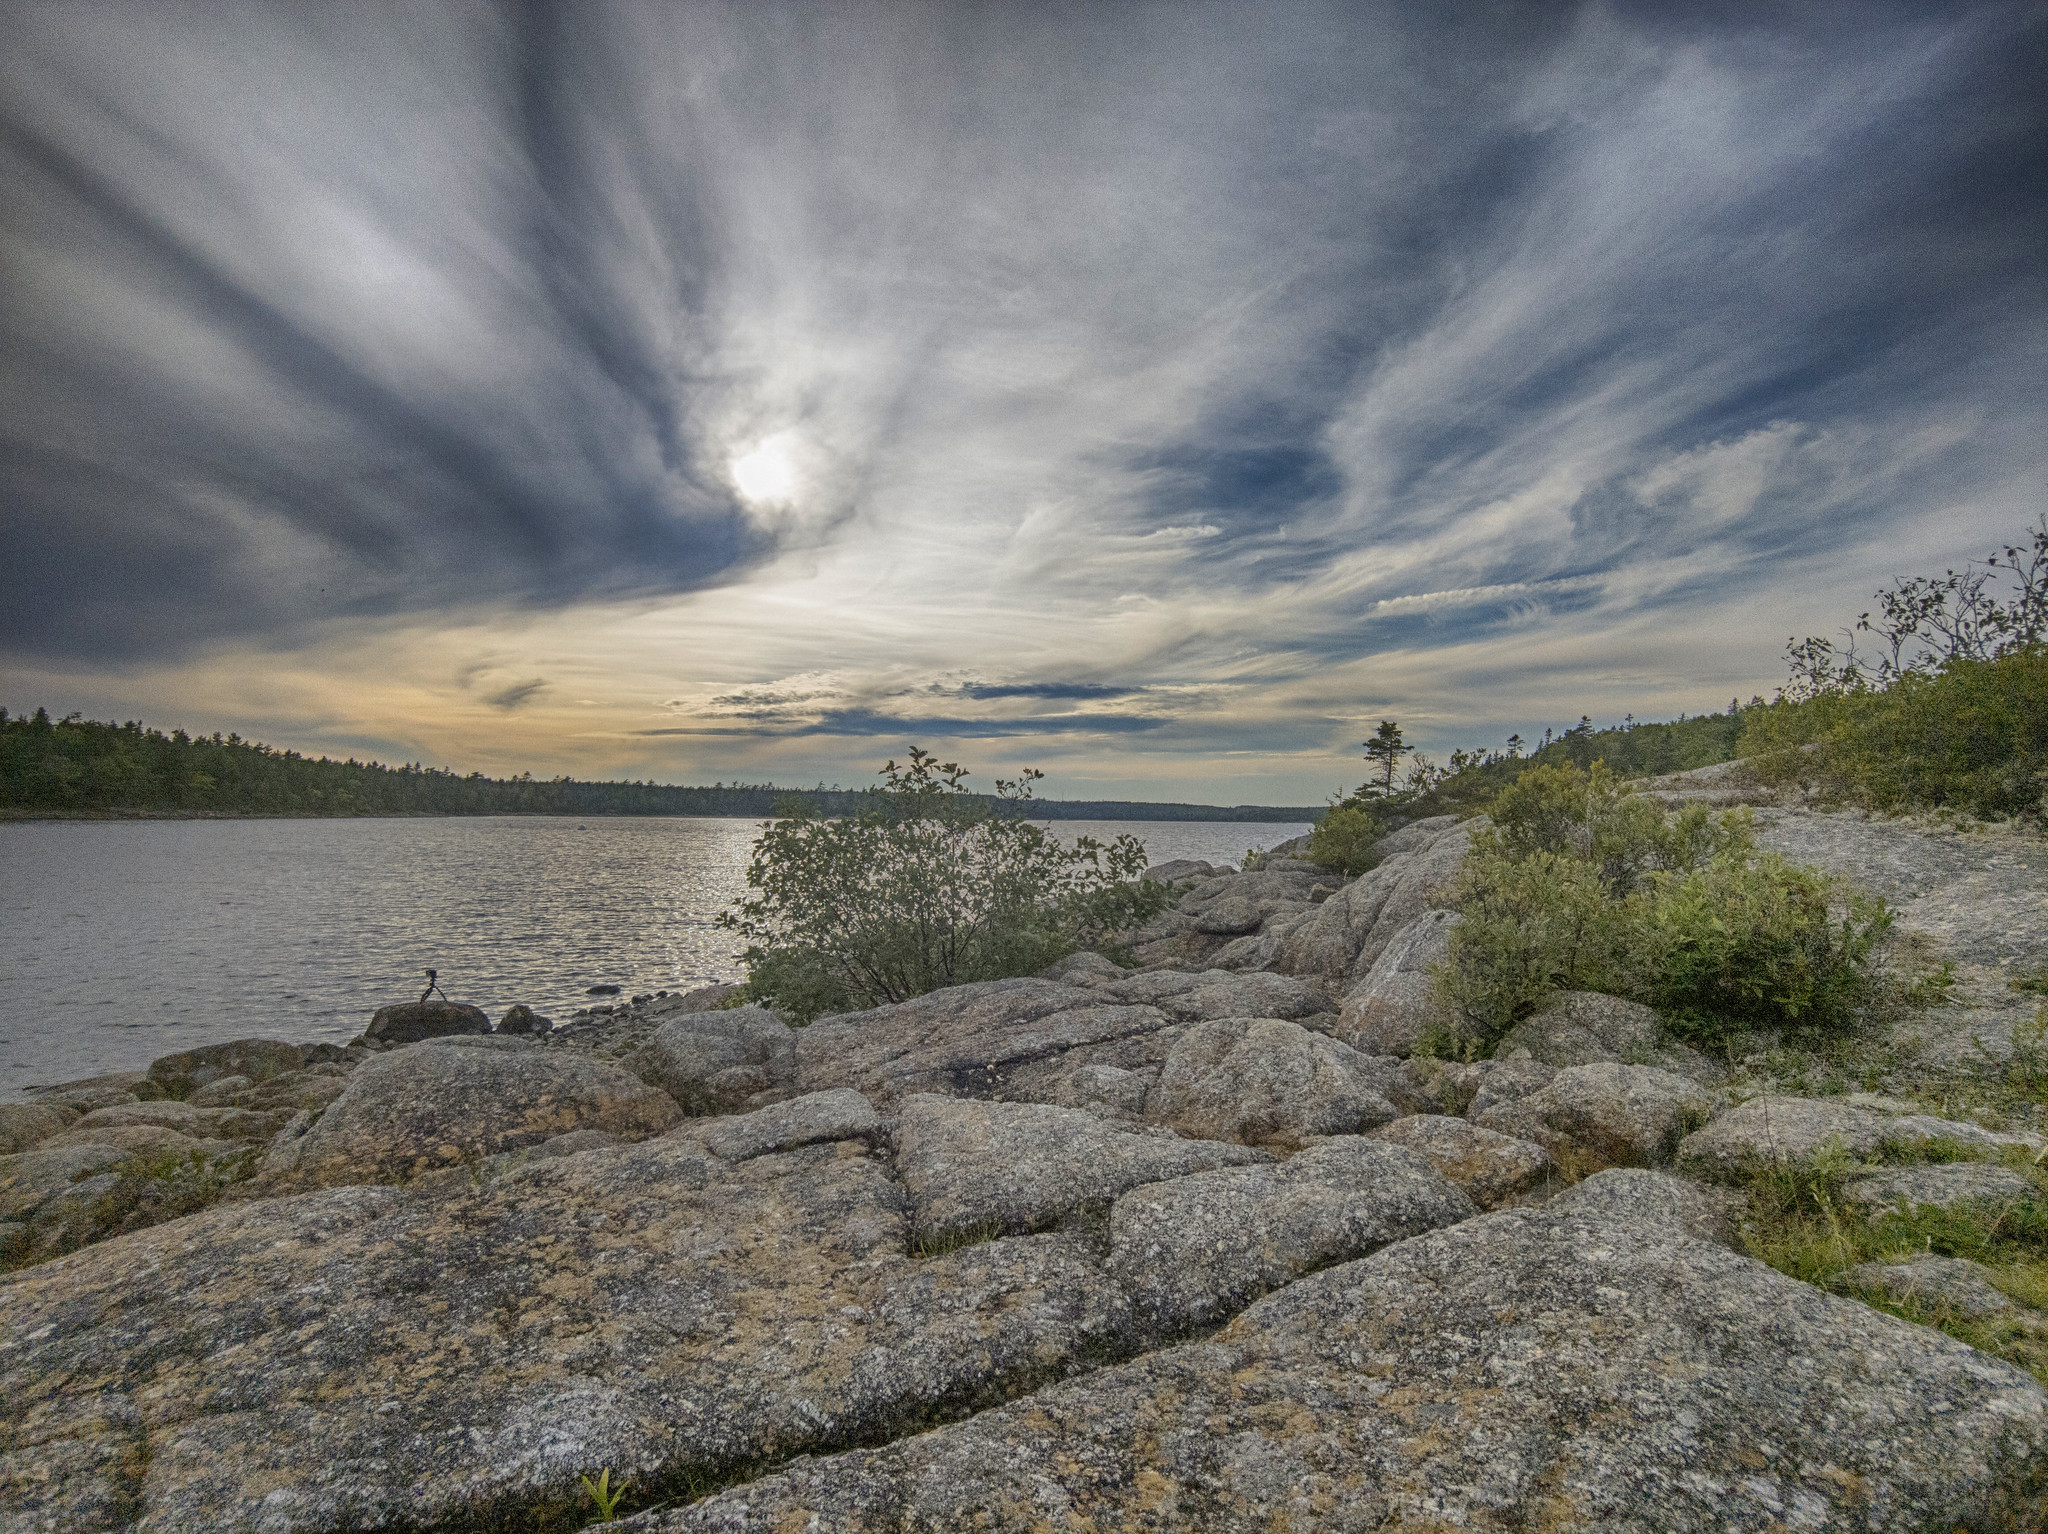 "Goat Island" Long Lake Provincial Park - Halifax, Nova Scotia